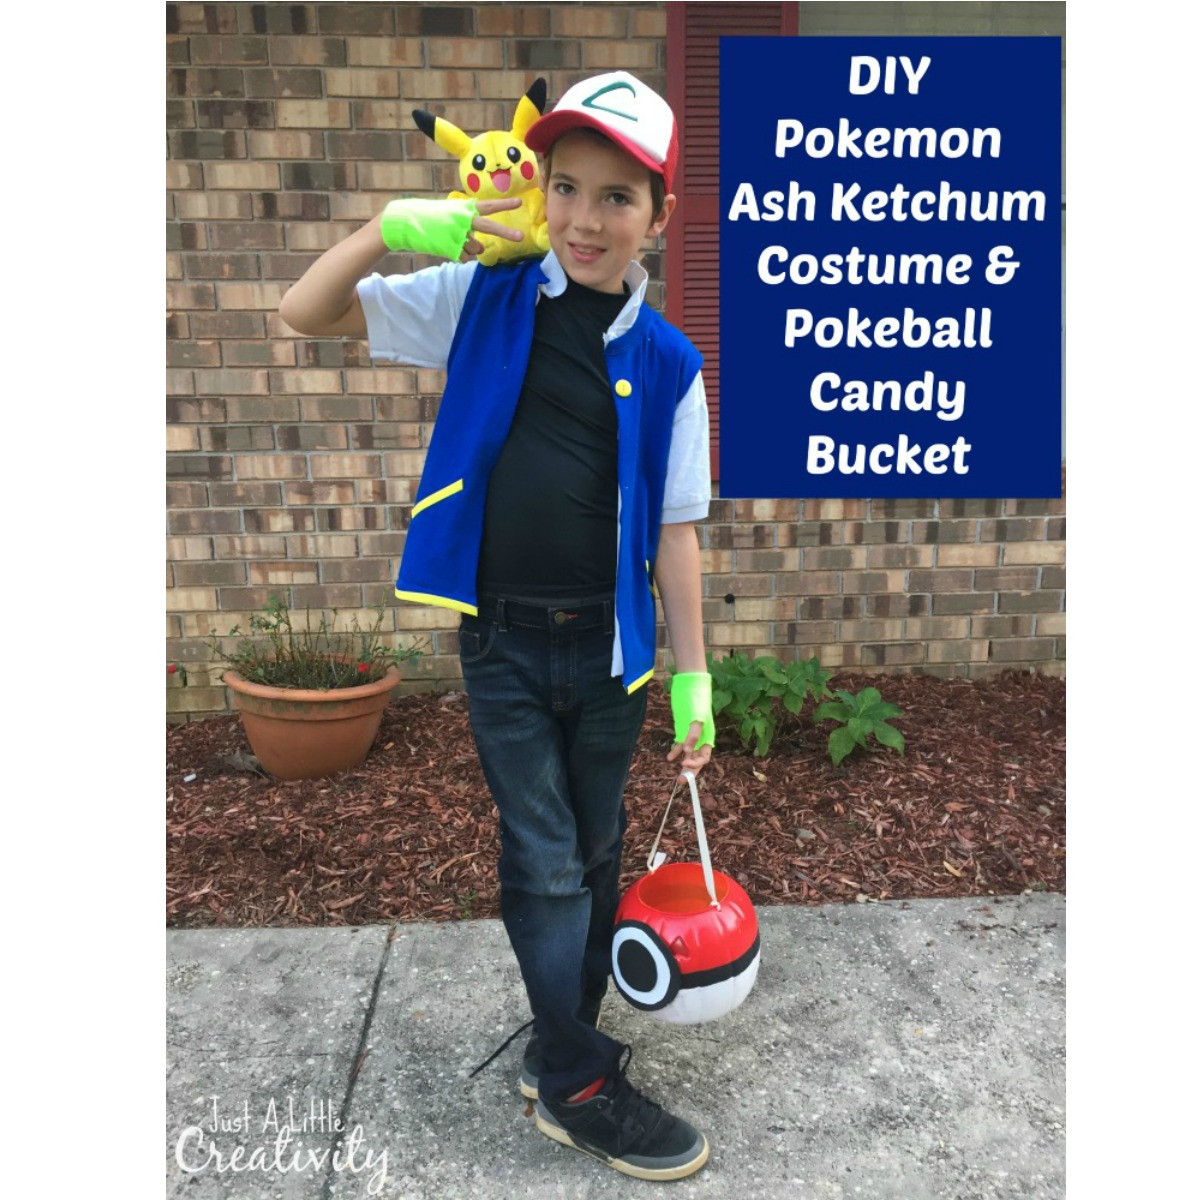 Ash Ketchum Costume DIY
 DIY Pokemon Ash Ketchum Costume & Pokeball Candy Bucket